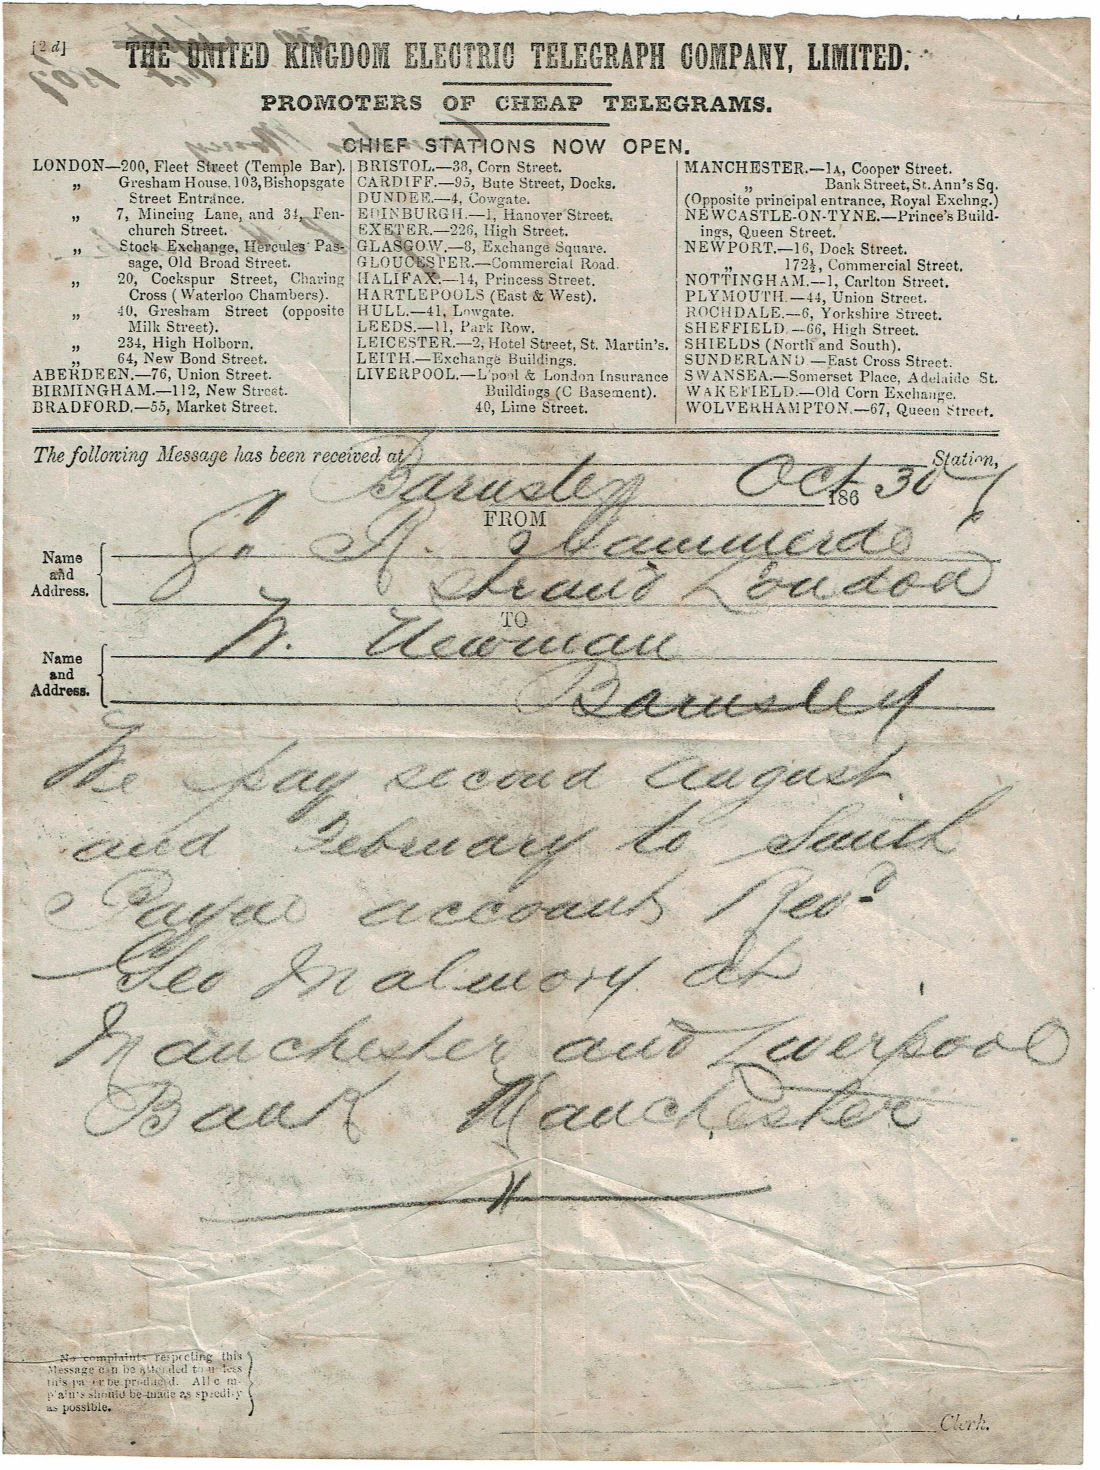 1866 UKET Telegram.